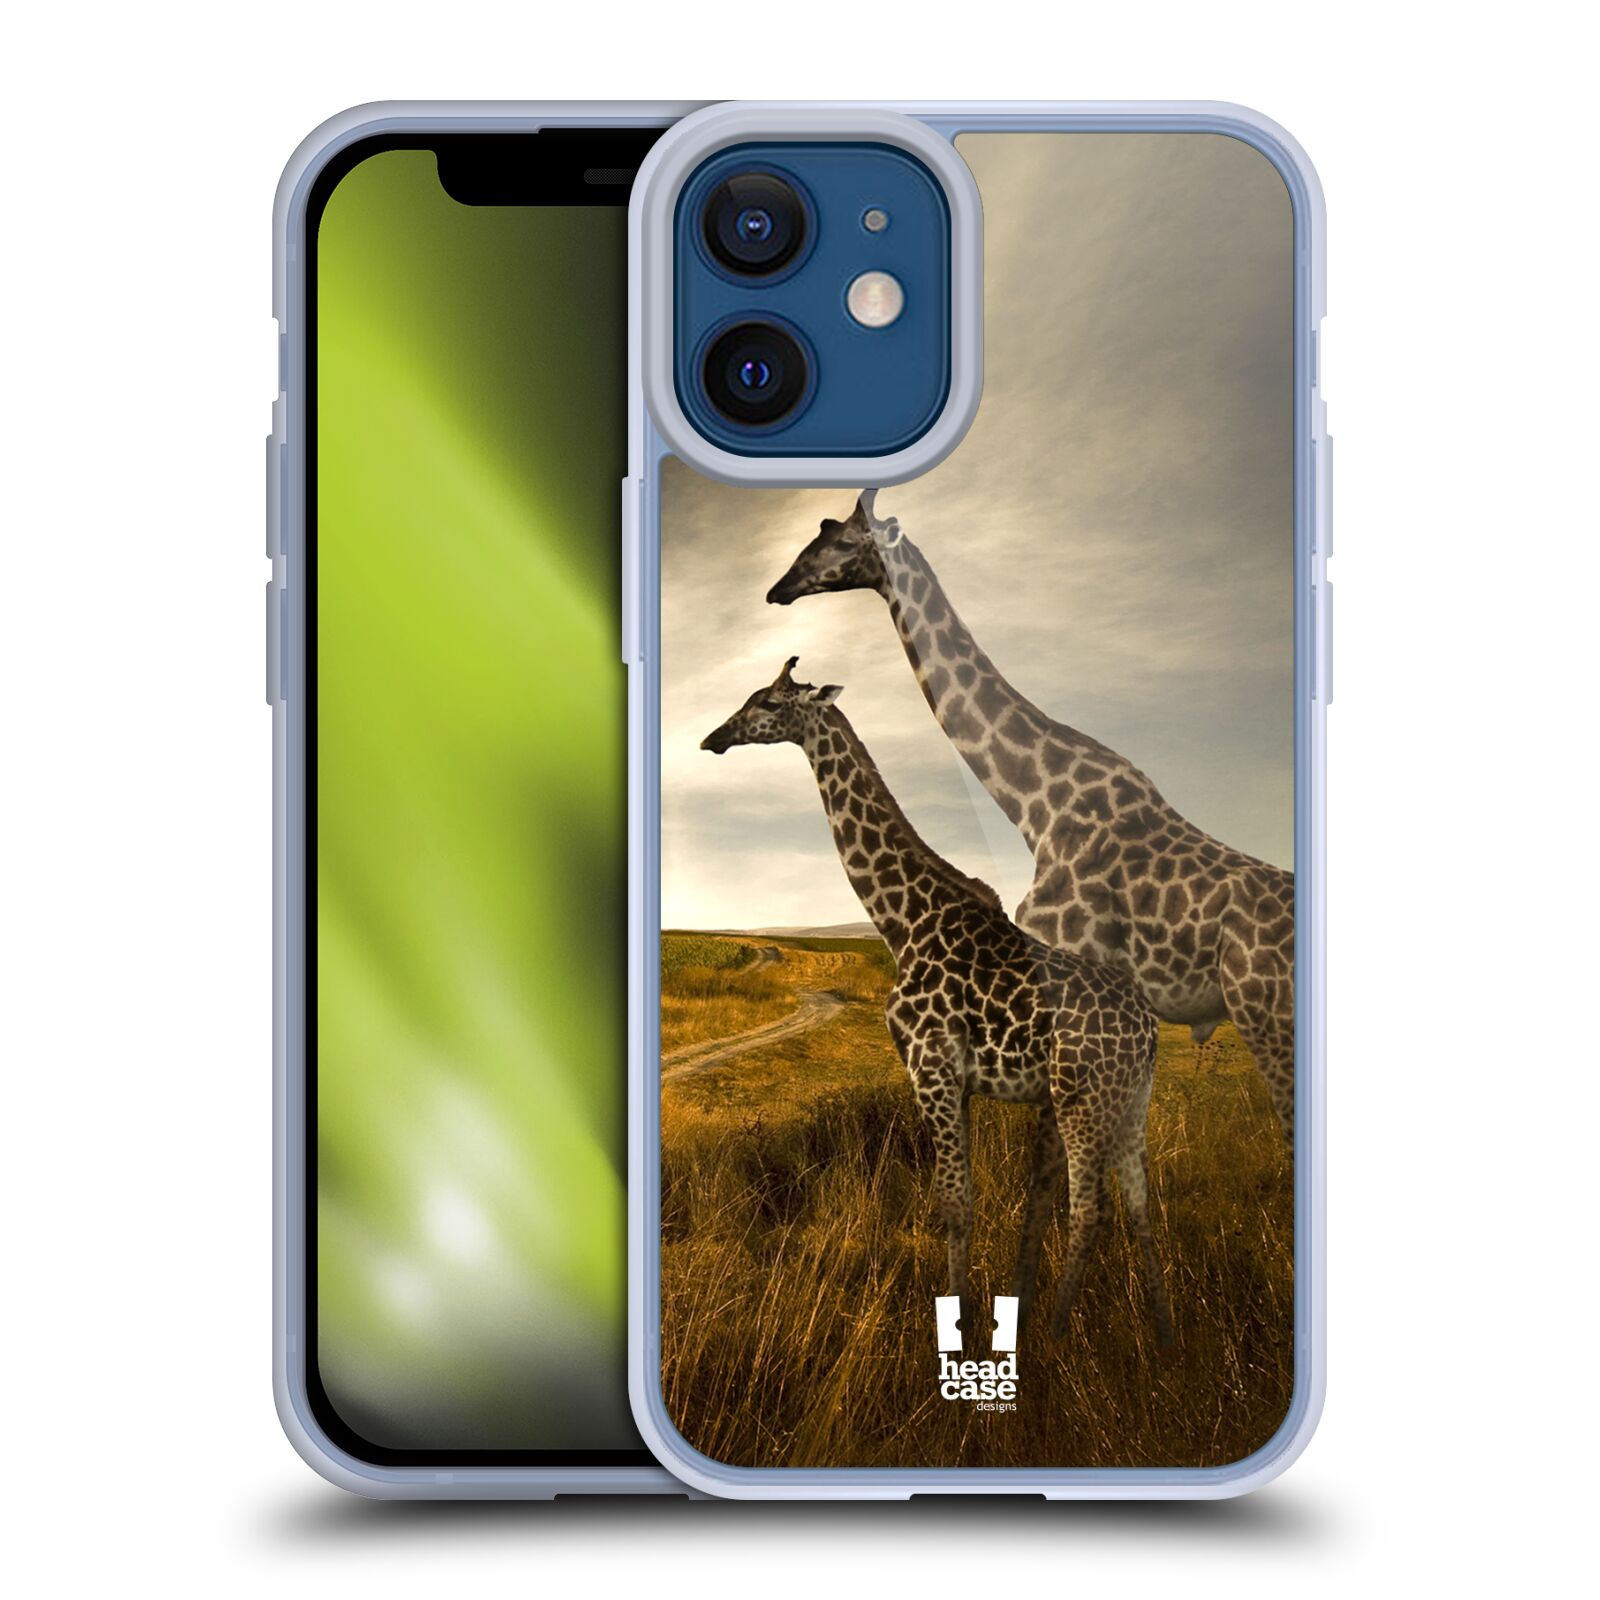 Plastový obal na mobil Apple Iphone 12 MINI vzor Divočina, Divoký život a zvířata foto AFRIKA ŽIRAFY VÝHLED